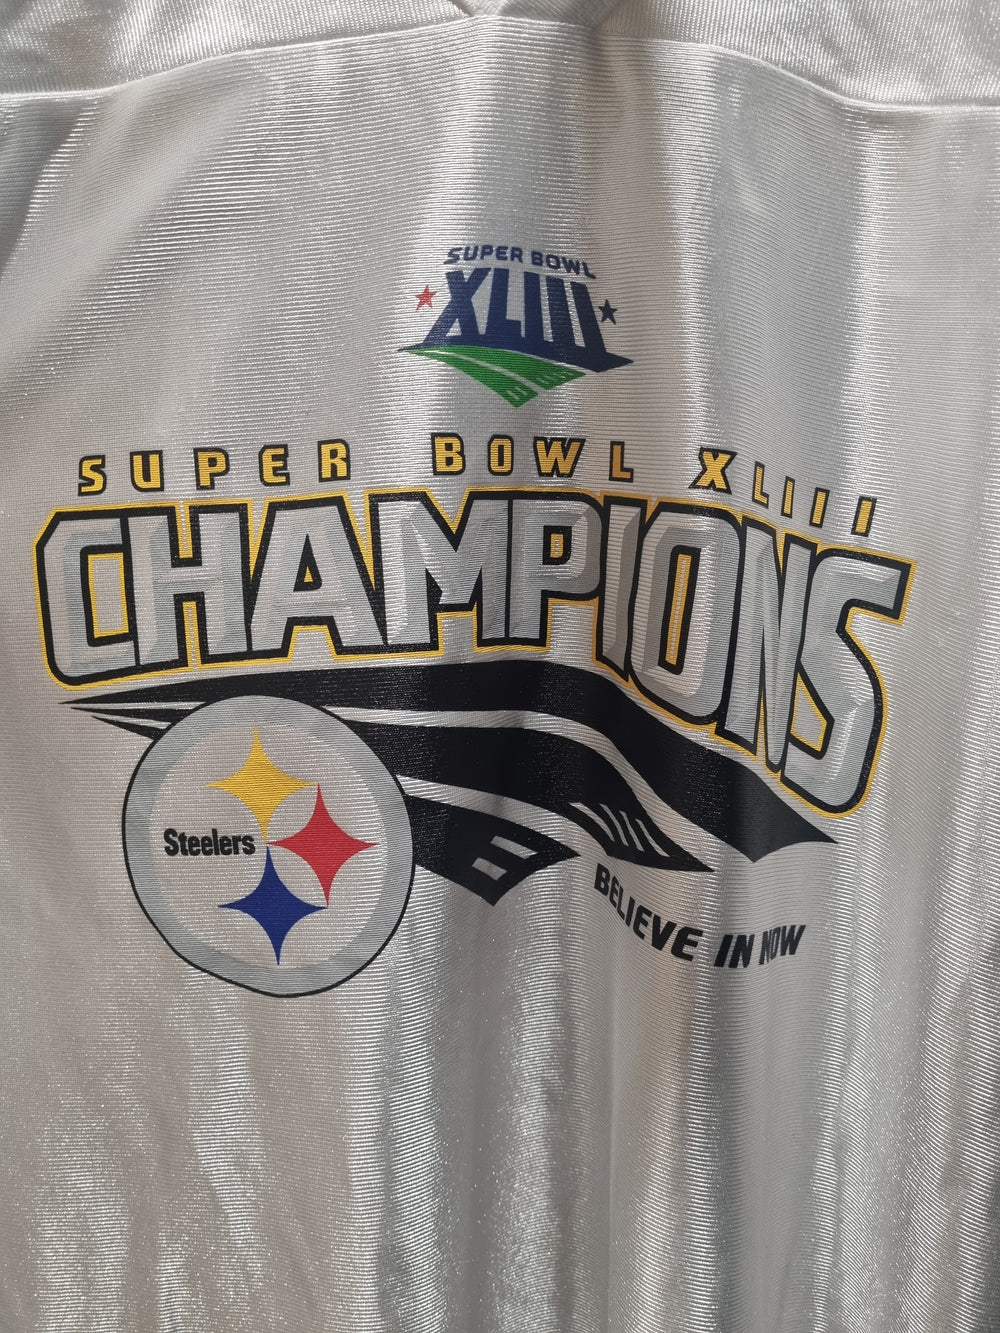 Steelers Roethlisberger Super Bowl Champions Large